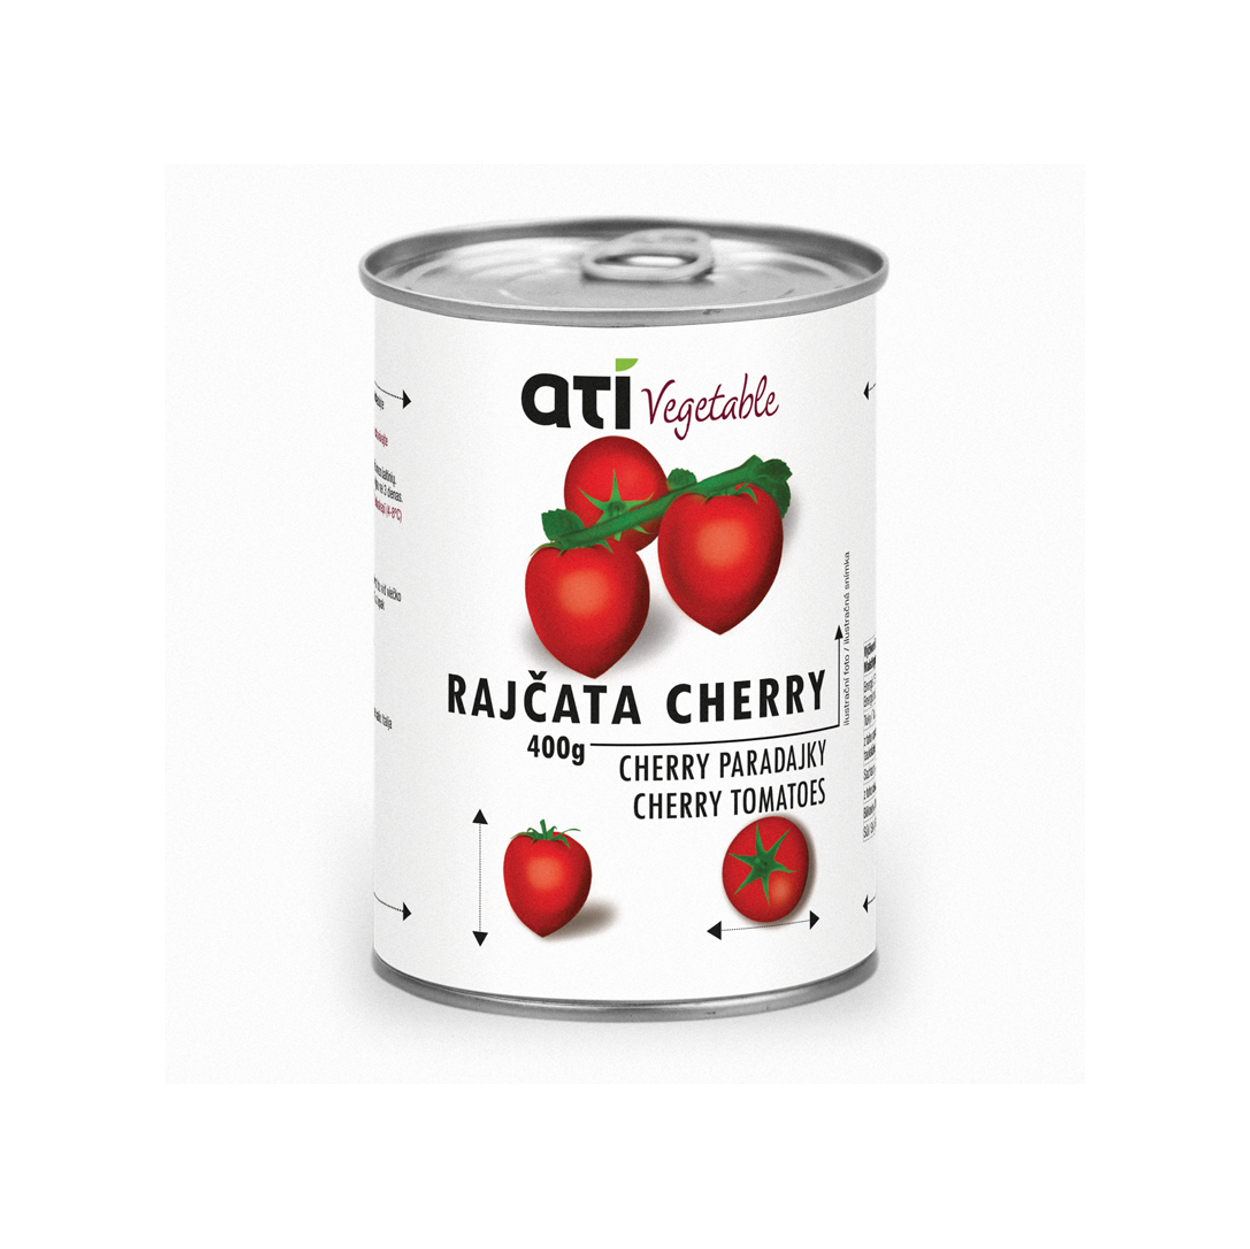 ATI Vegetable cherry tomatoes